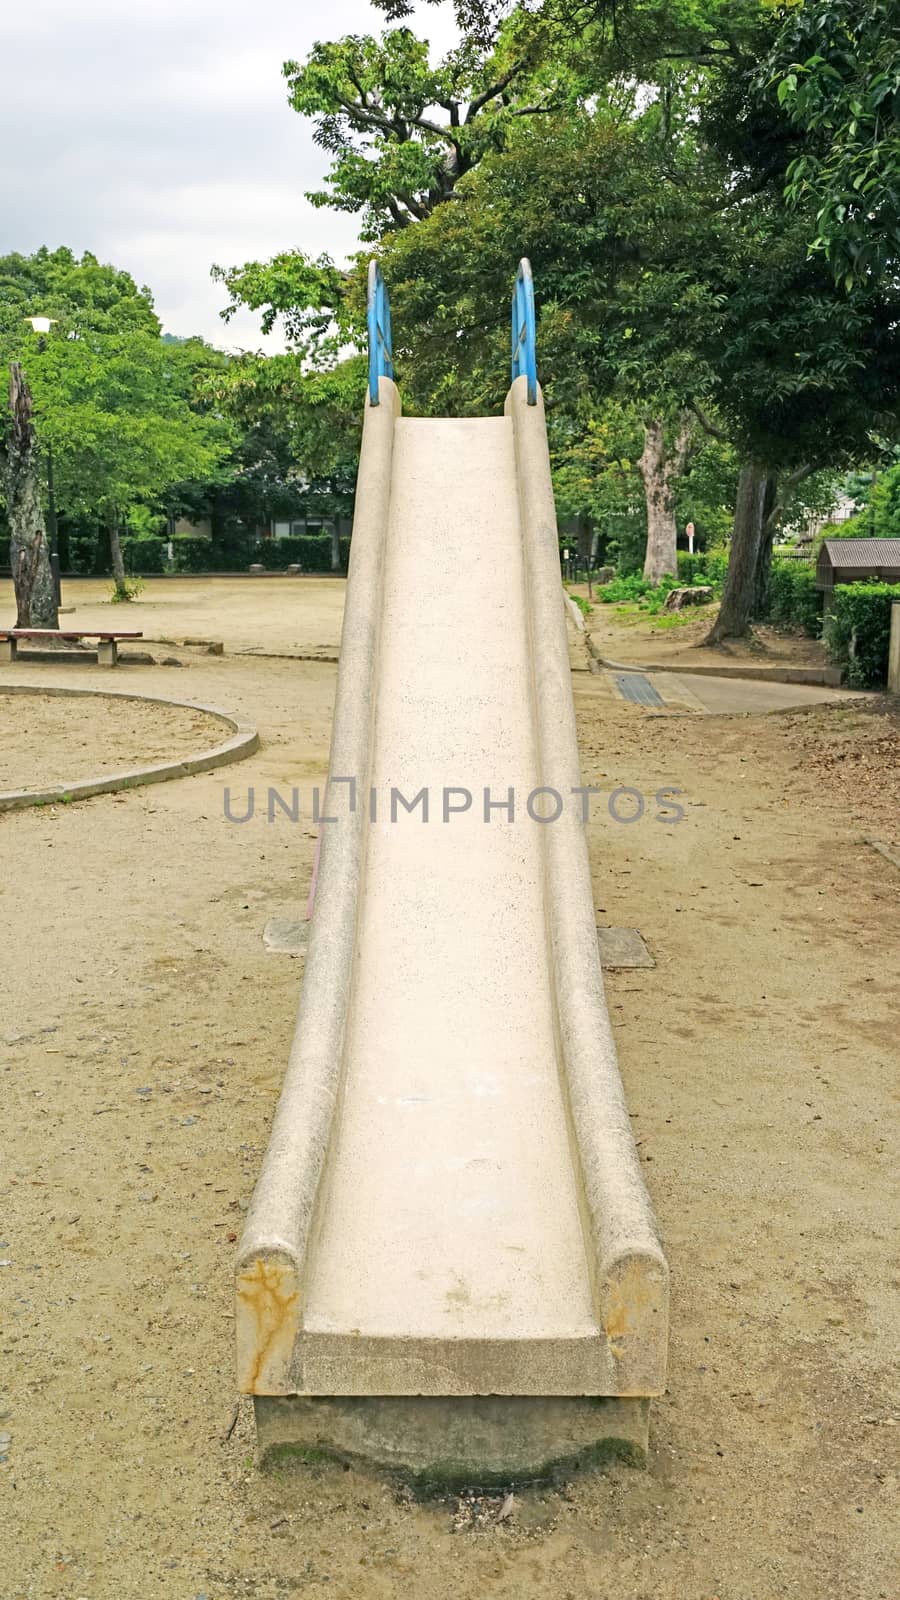 The vertical retro children slide equipment in Japan outdoor playround